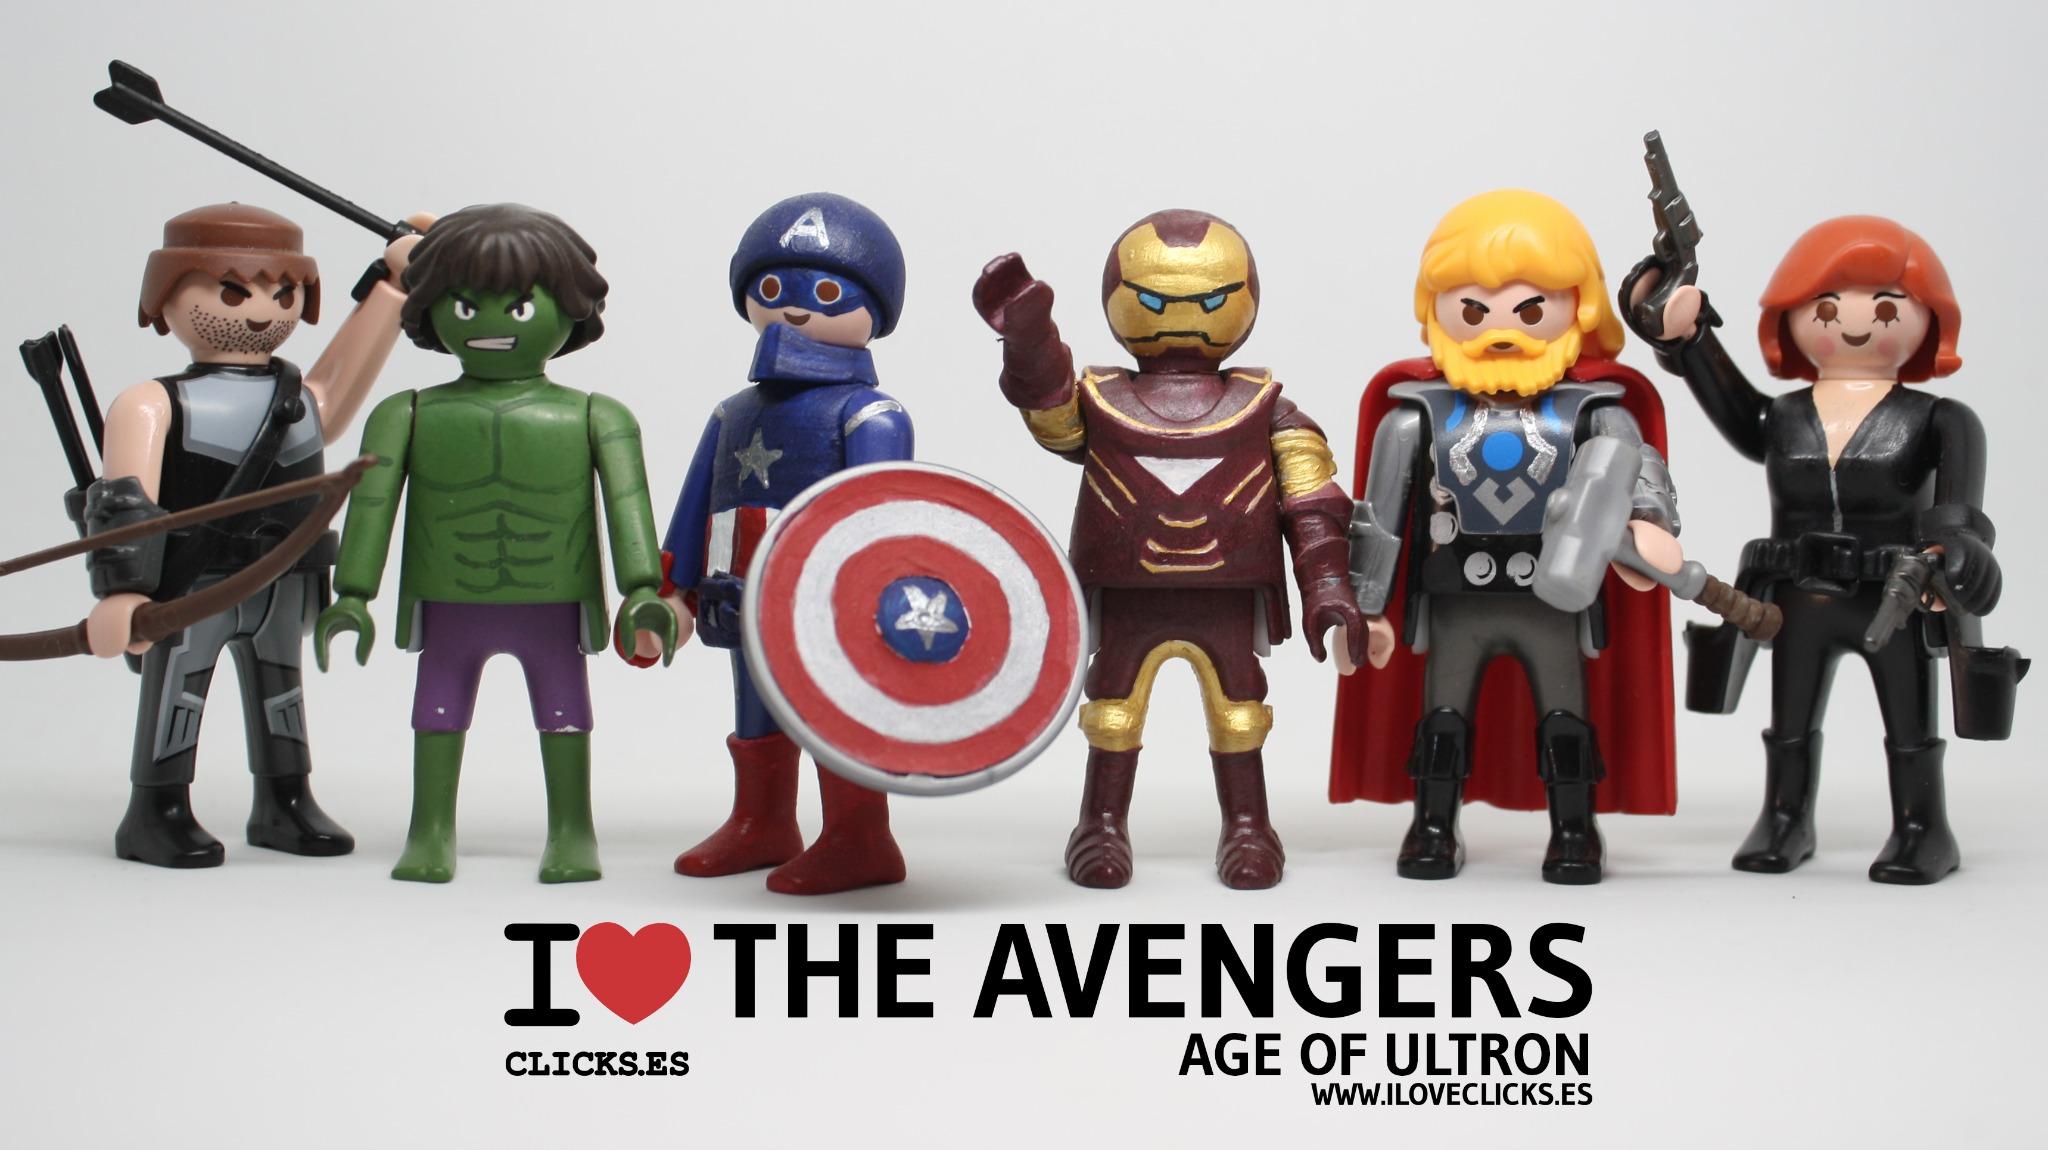 pecado Pinchazo la seguridad I Love Clicks on Twitter: "Primer tráiler de la nueva peli de The Avengers  2: Age of Ultron!!! Molaaaa http://t.co/7Vfv4b0hD5 http://t.co/IlKeXnzaYs"  / Twitter